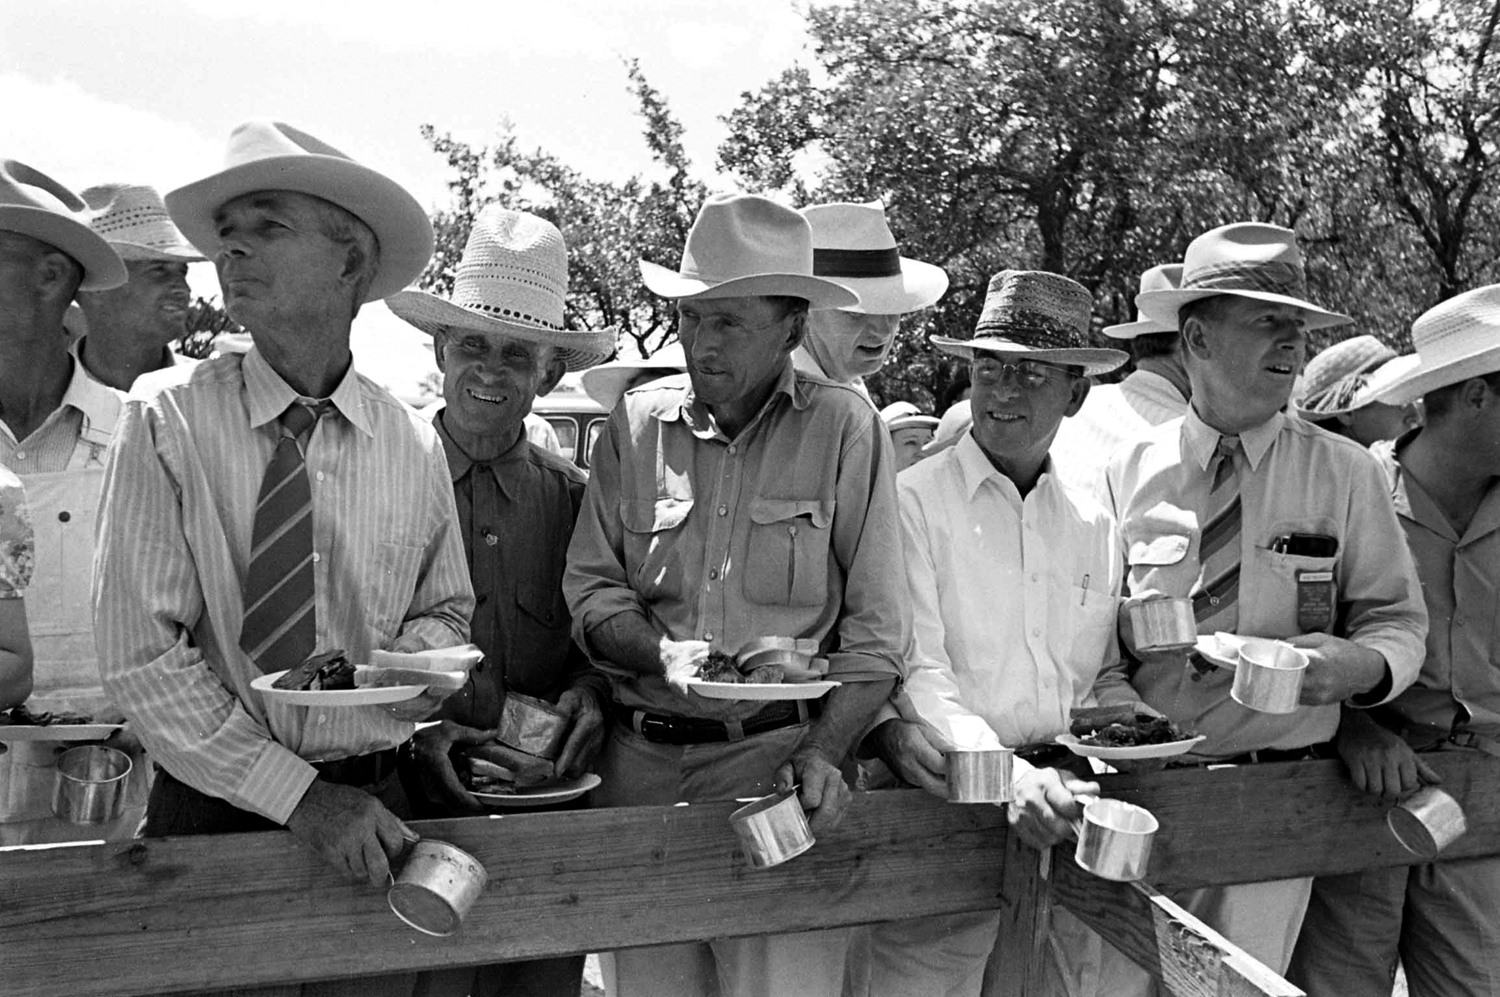 Angora goat auction and sale, Texas, 1942.